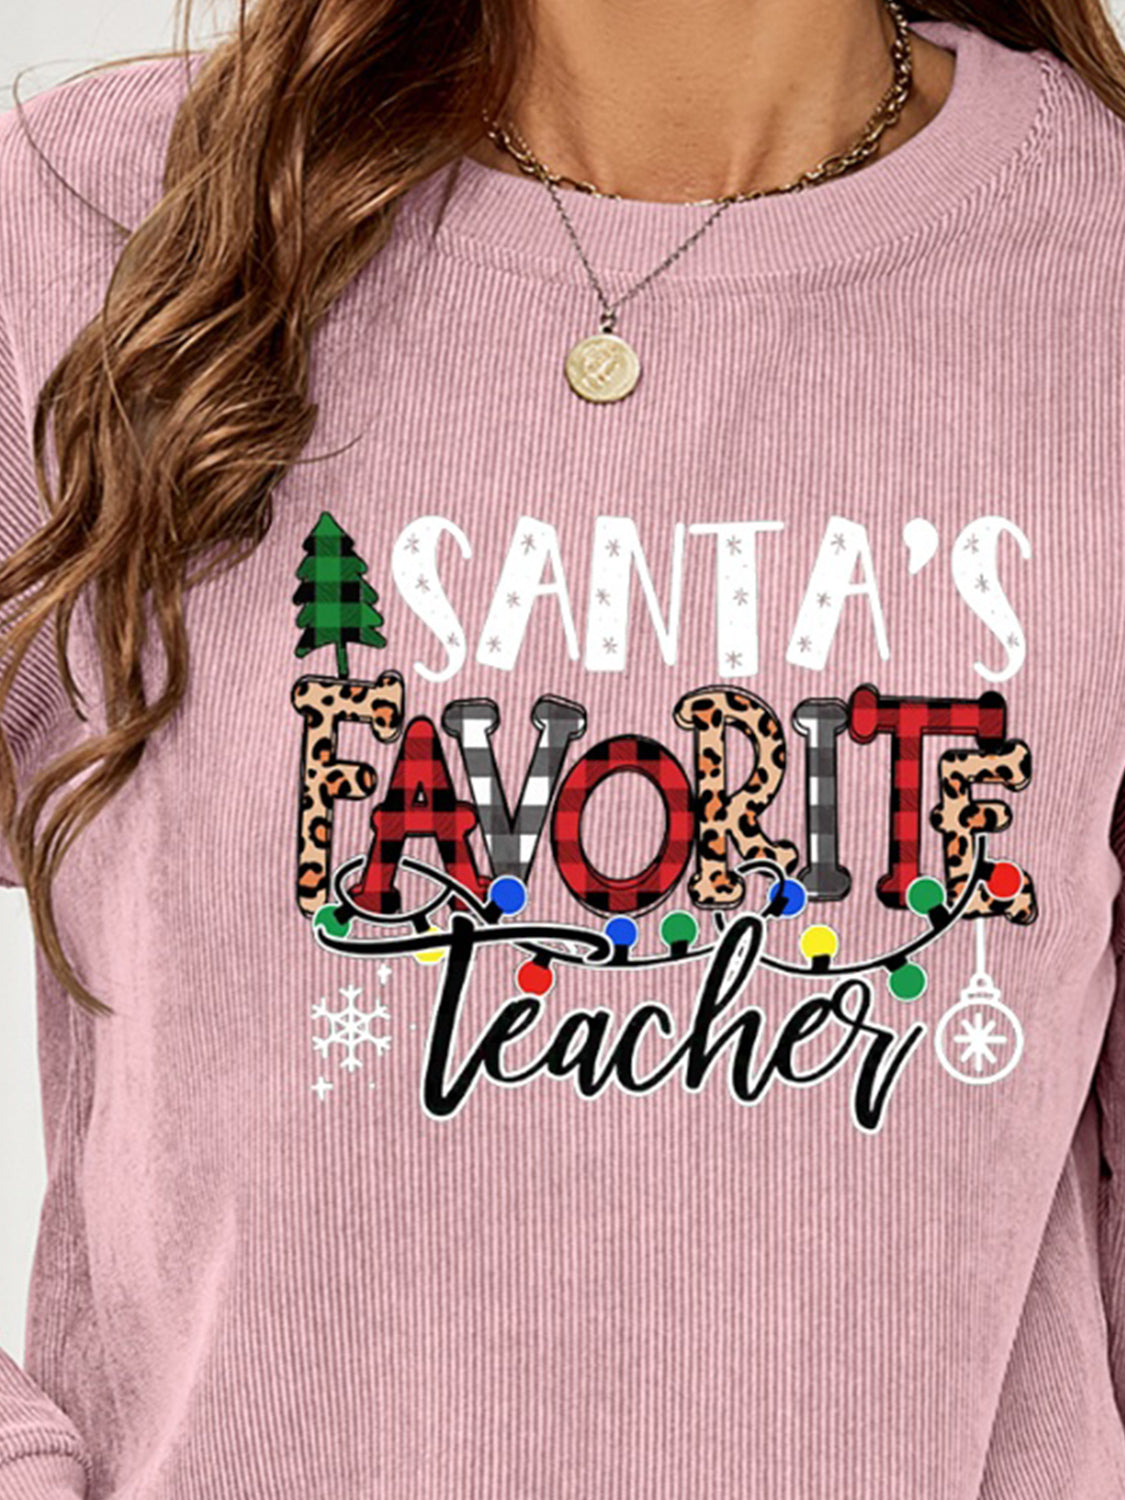 SANTA'S FAVORITE TEACHER Graphic Sweatshirt